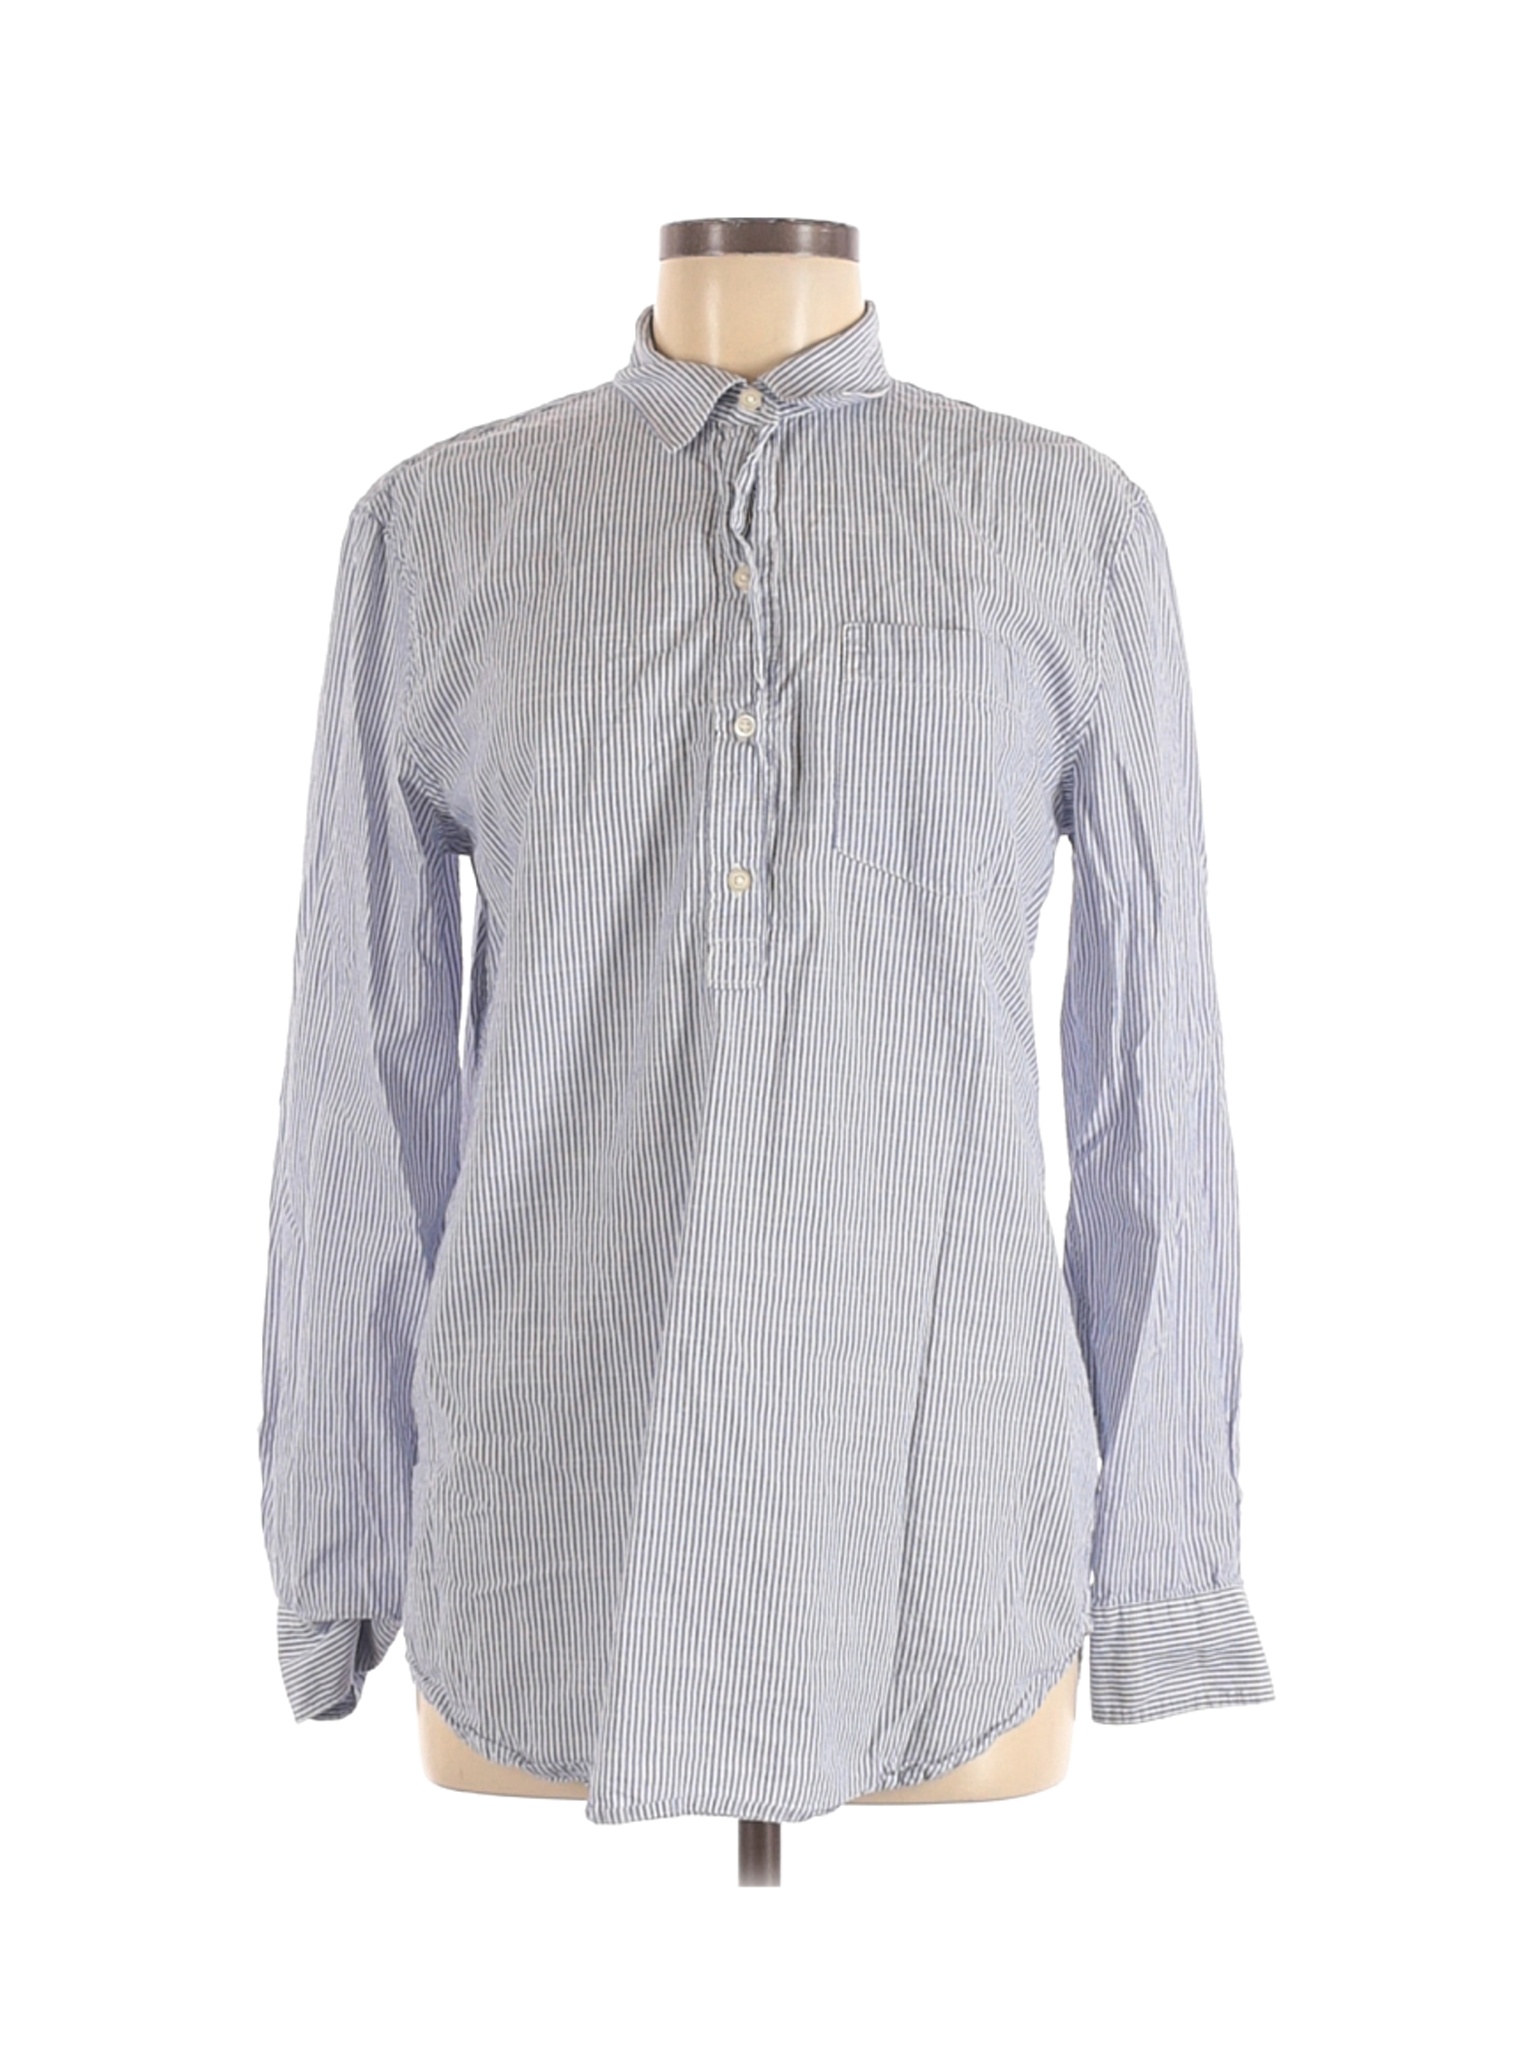 Gap Women Gray Long Sleeve Blouse M Tall | eBay